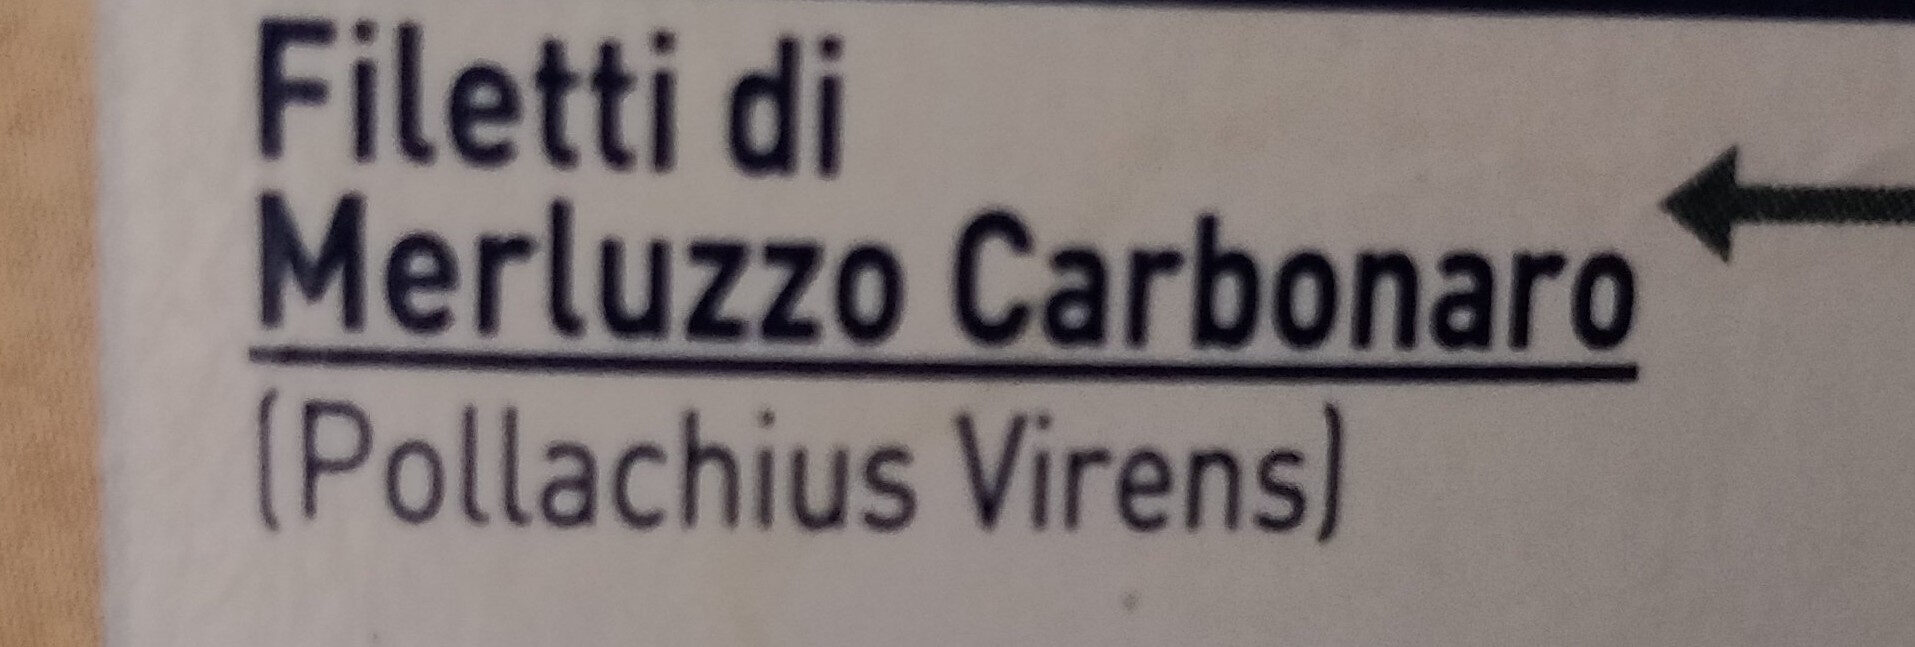 Merluzzo carbonaro - Ingredients - it